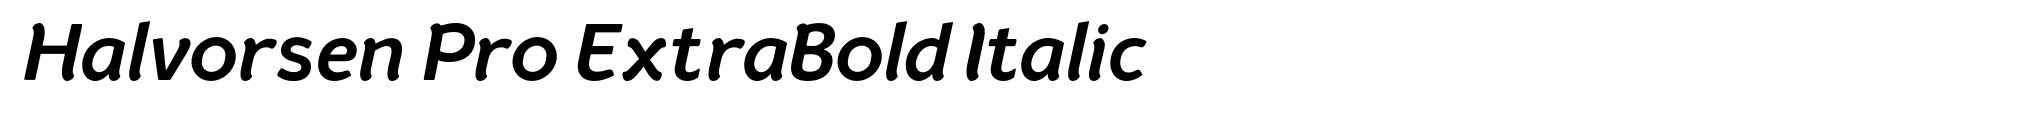 Halvorsen Pro ExtraBold Italic image